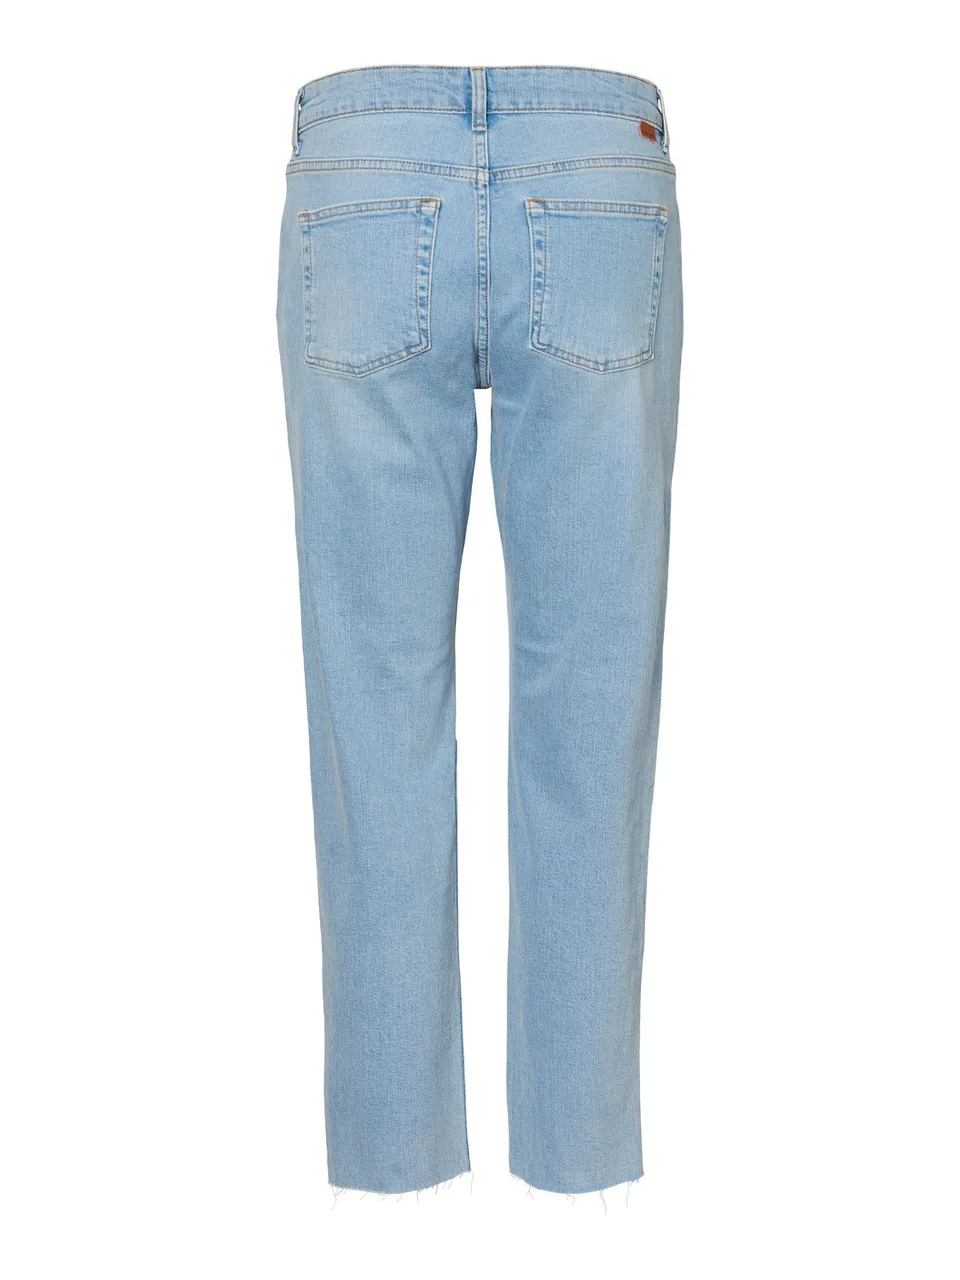 Noisy May Damen Jeans NMJENNA NW STRGHT ANK KI013LB - Straight Fit - Blau - Light Blue Denim